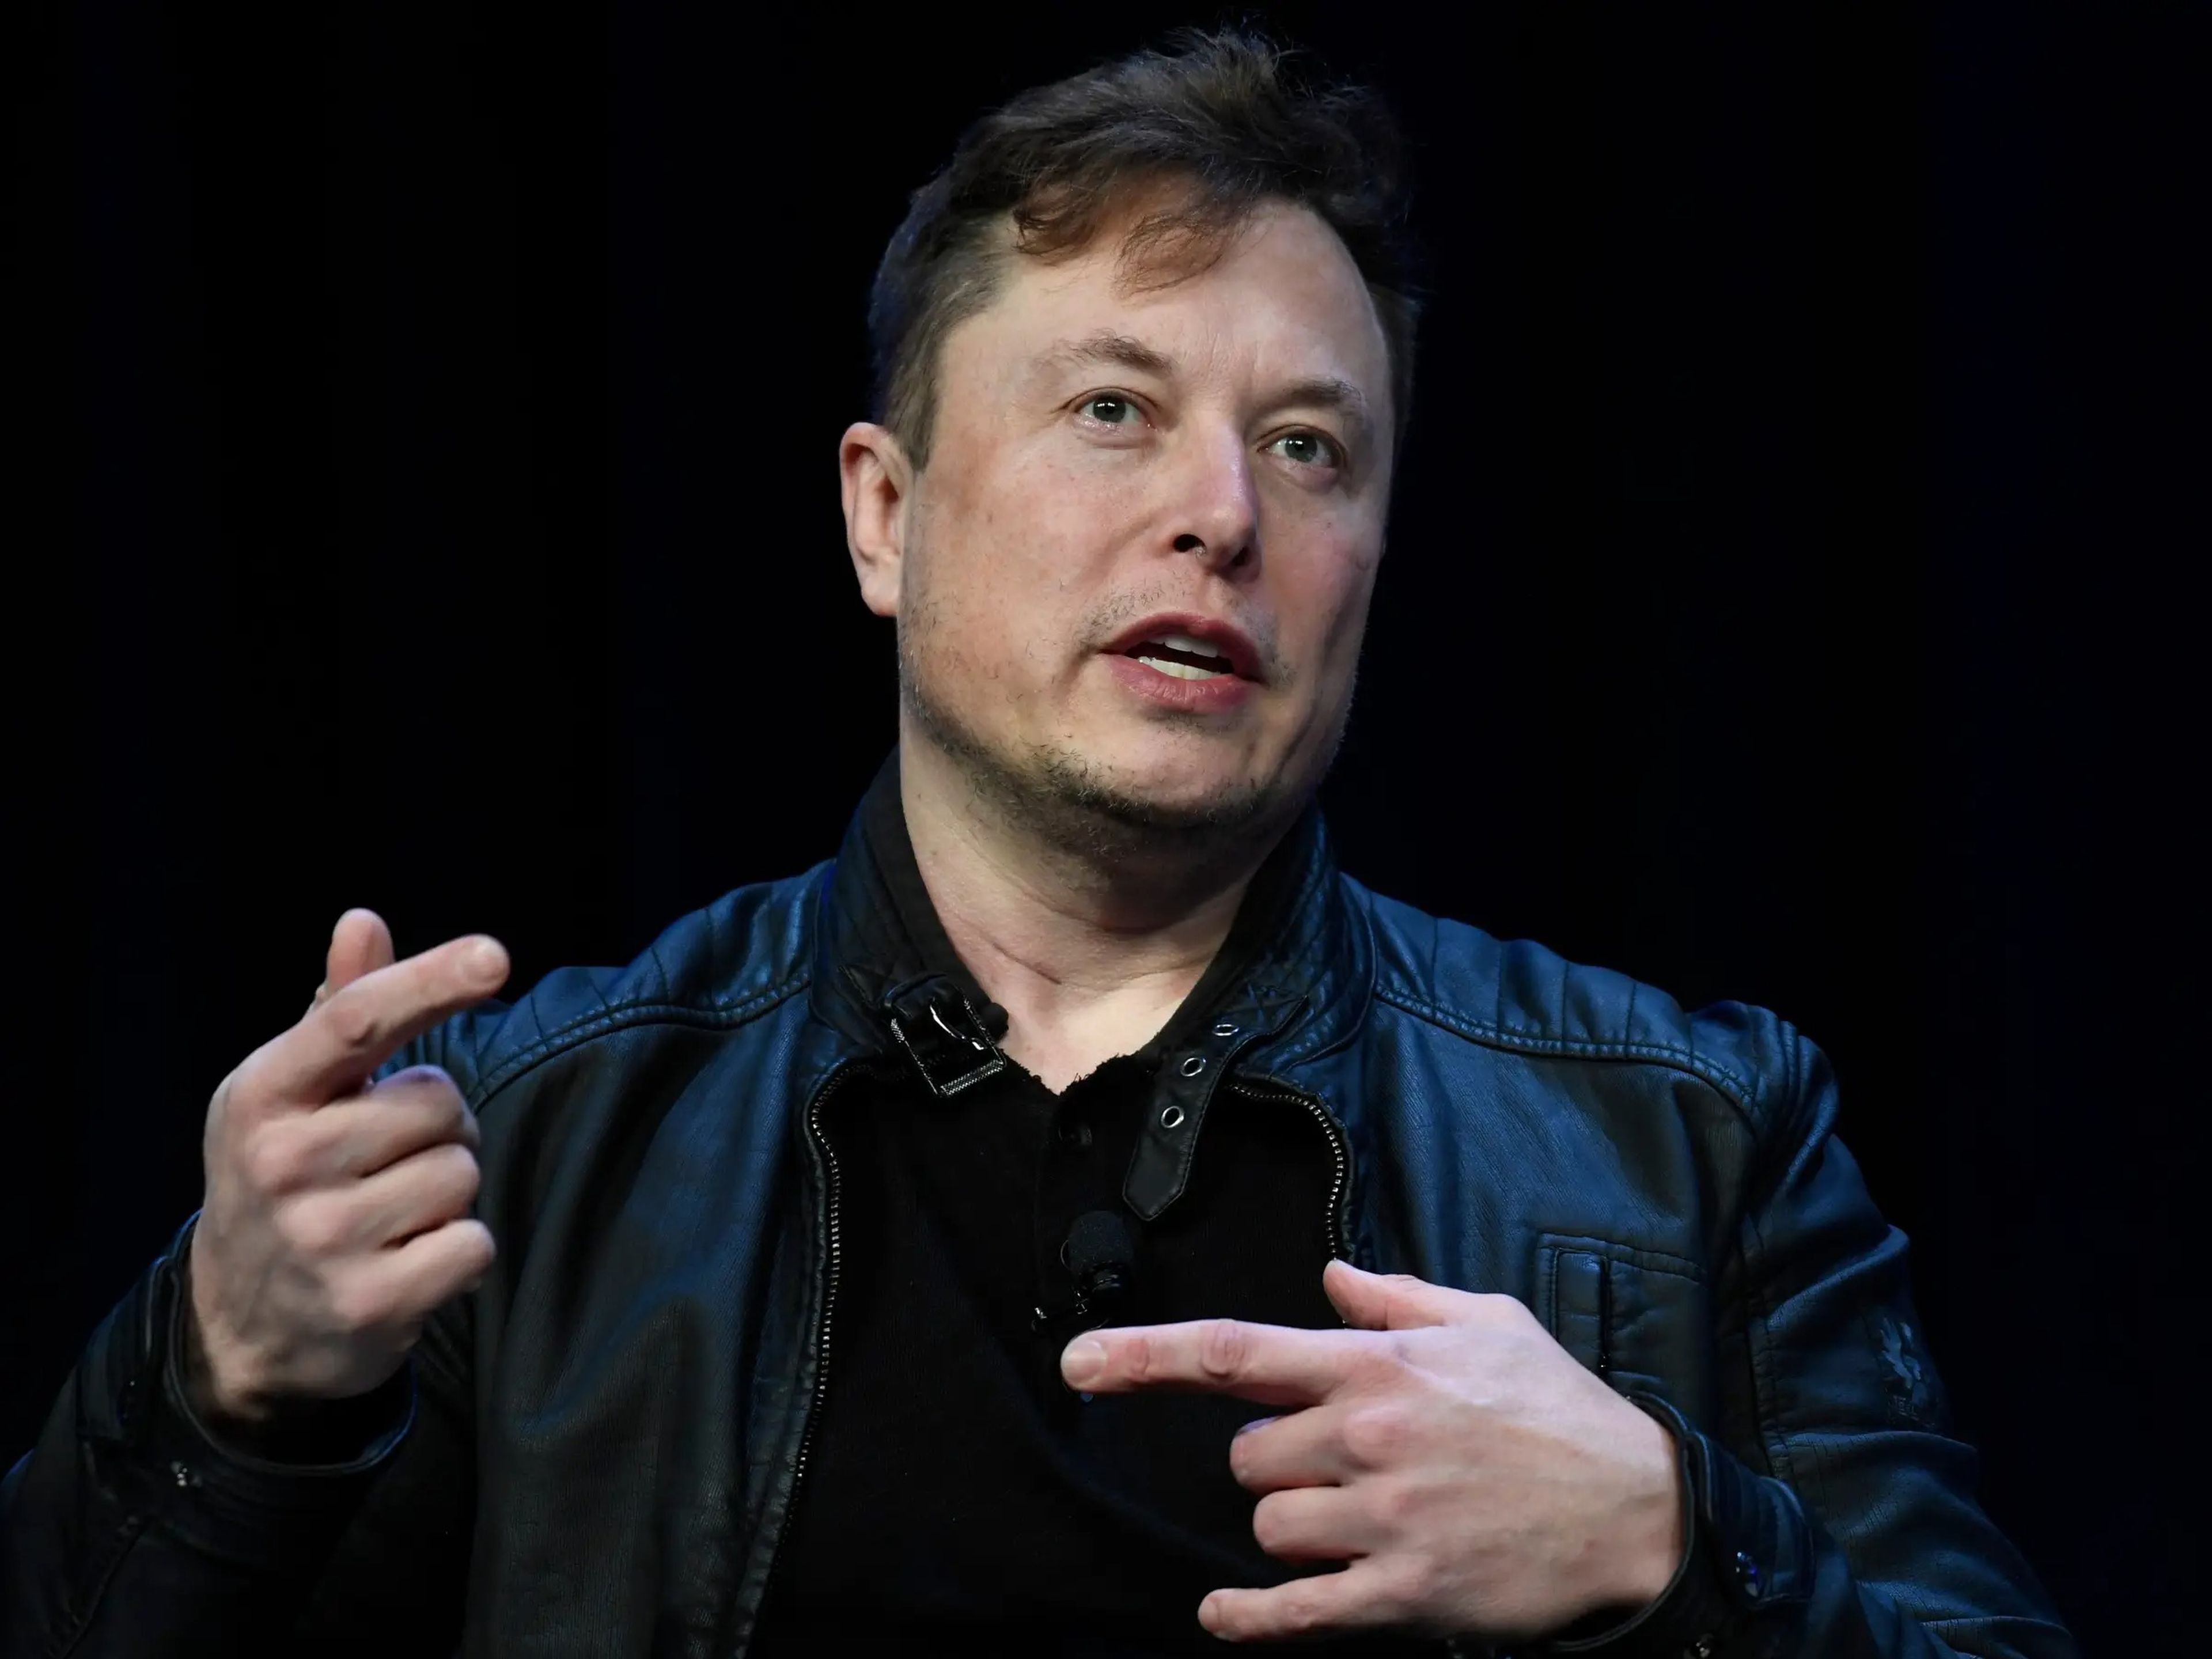 SpaceX CEO Elon Musk.